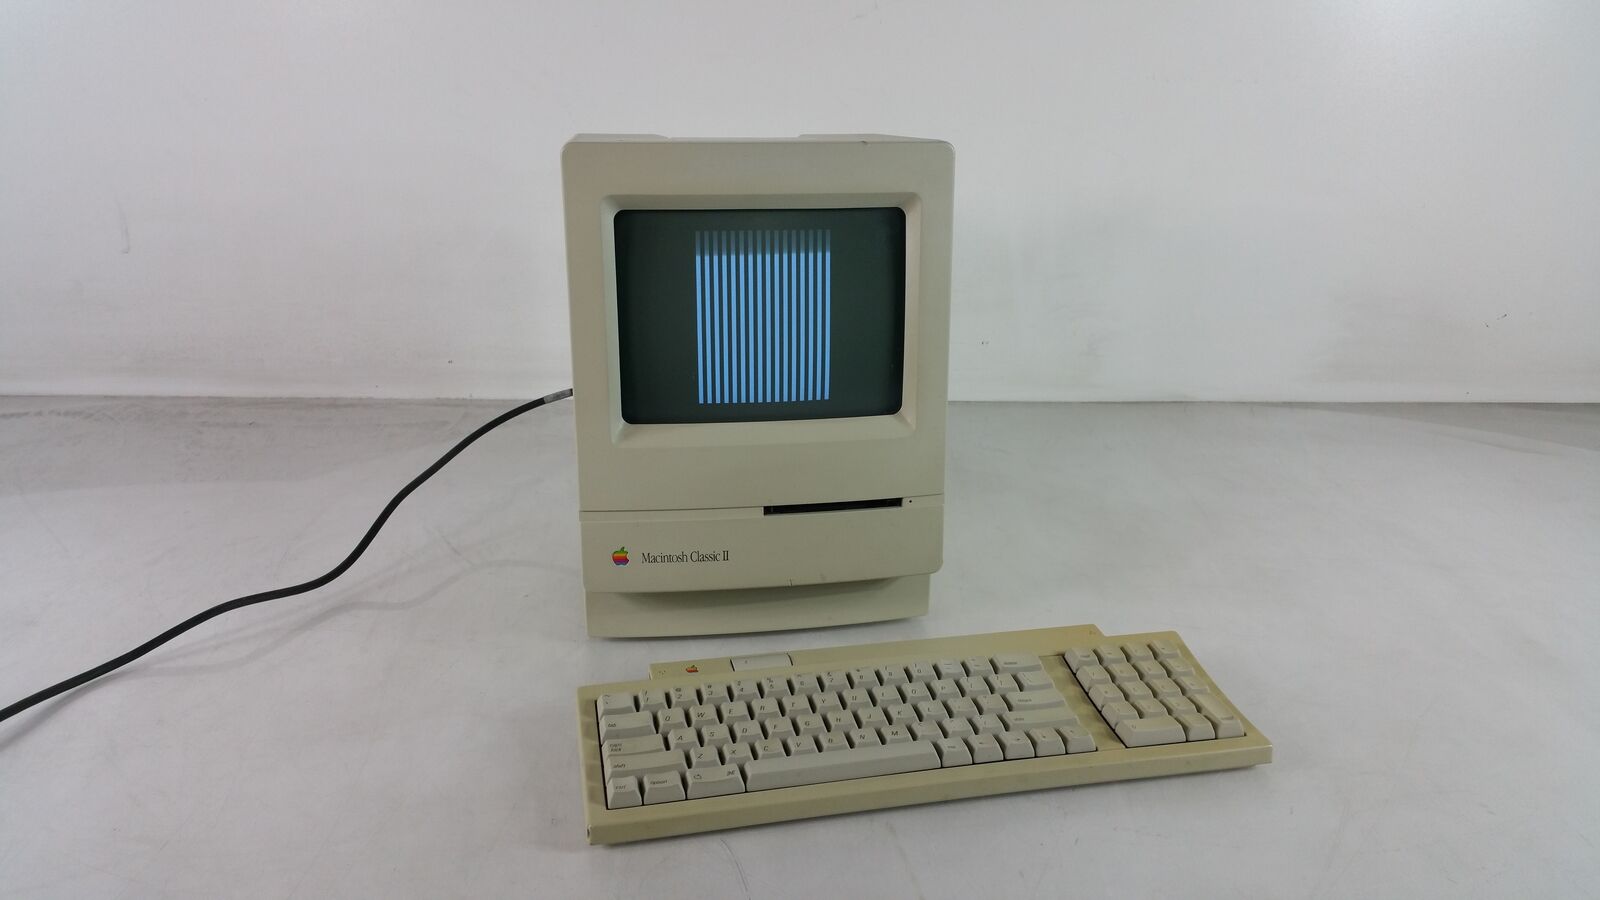 Apple M4150 Vintage Macintosh Classic II 1991 Computer-Read Description